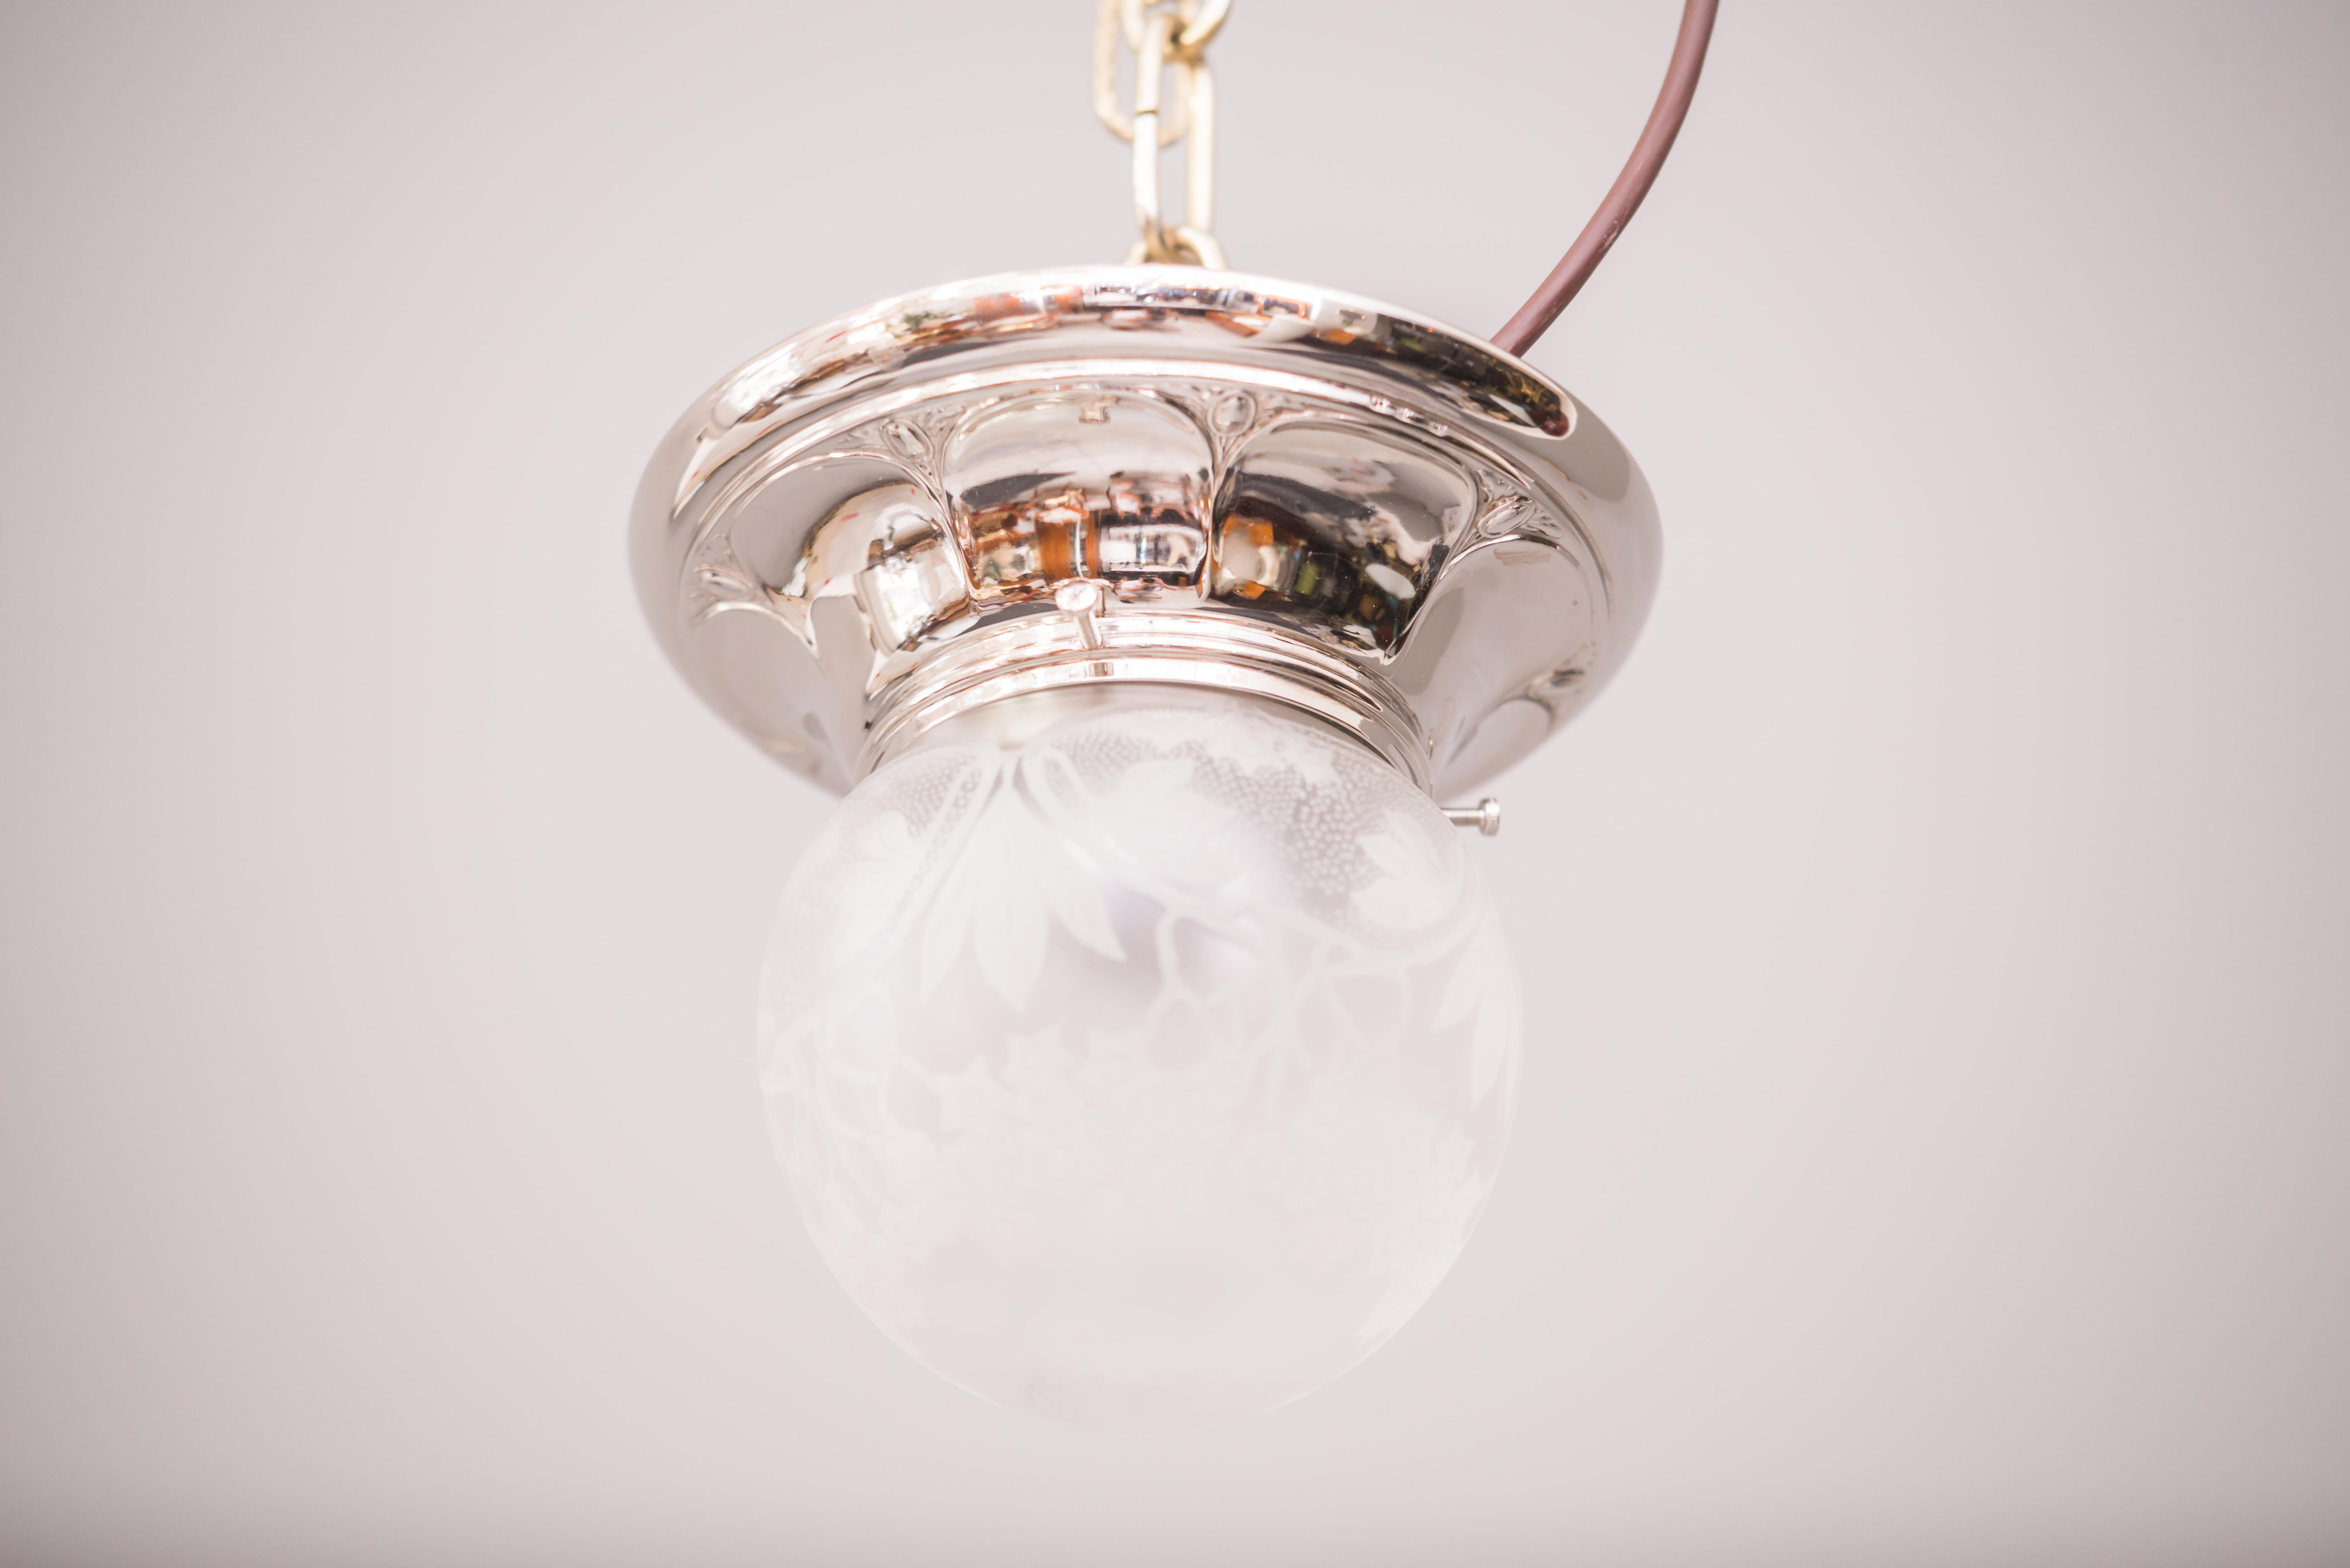 Small Jugendstil ceiling lamp circa 1907
Nickel-plated
Very beautiful original glass.